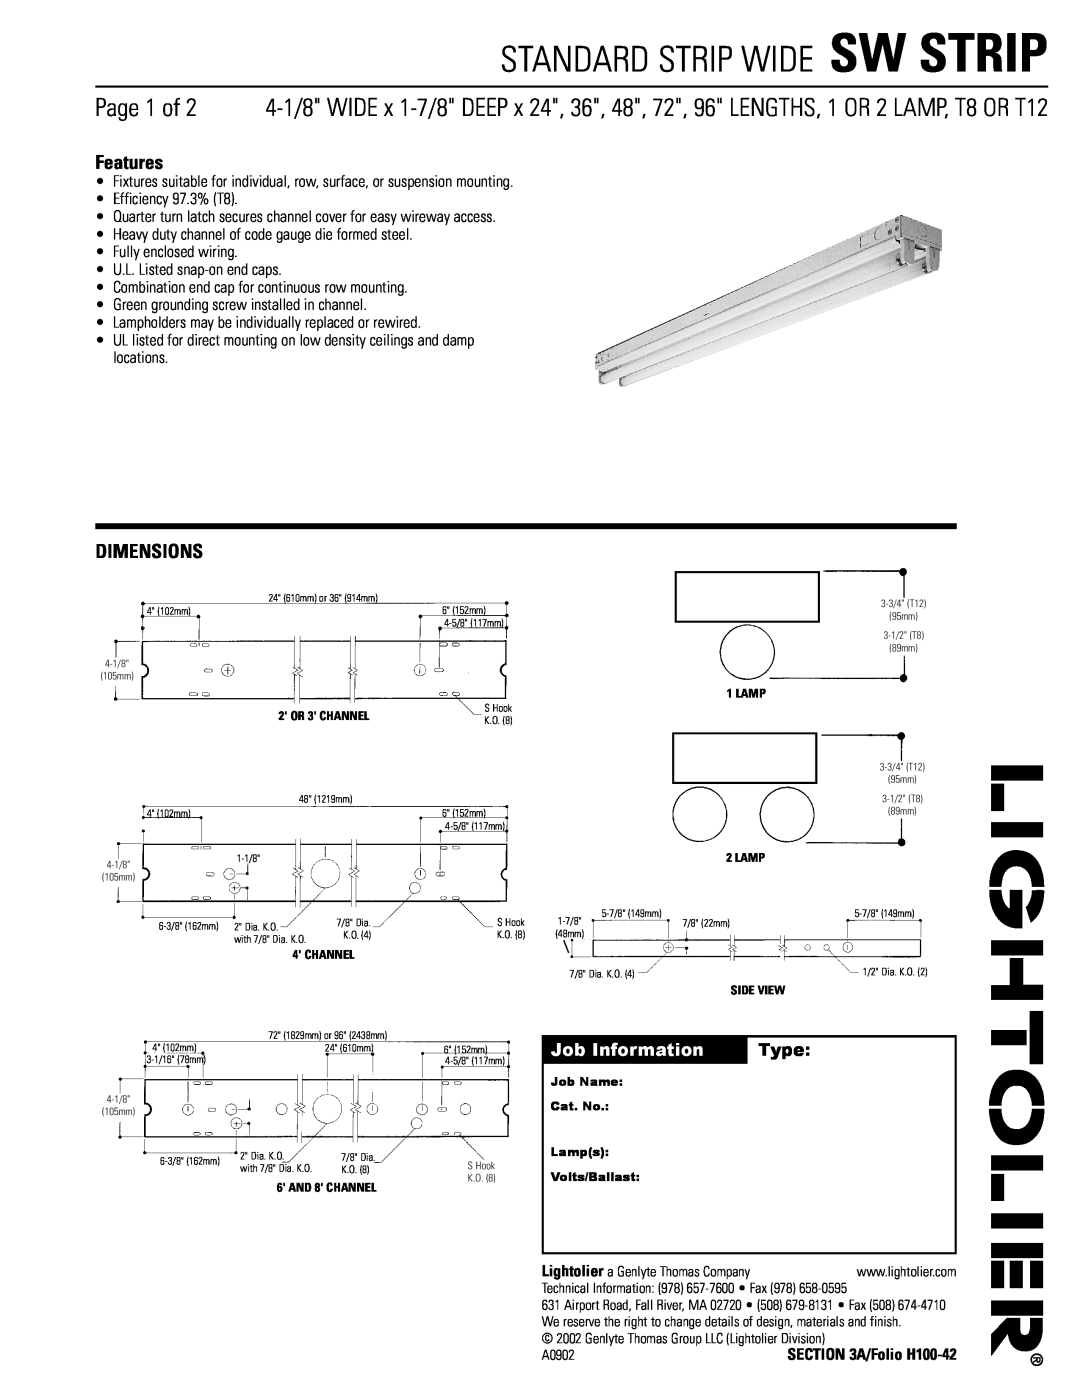 Lightolier SW STRIP dimensions Standard Strip Wide Sw Strip, Features, Dimensions, Job Information, Type 